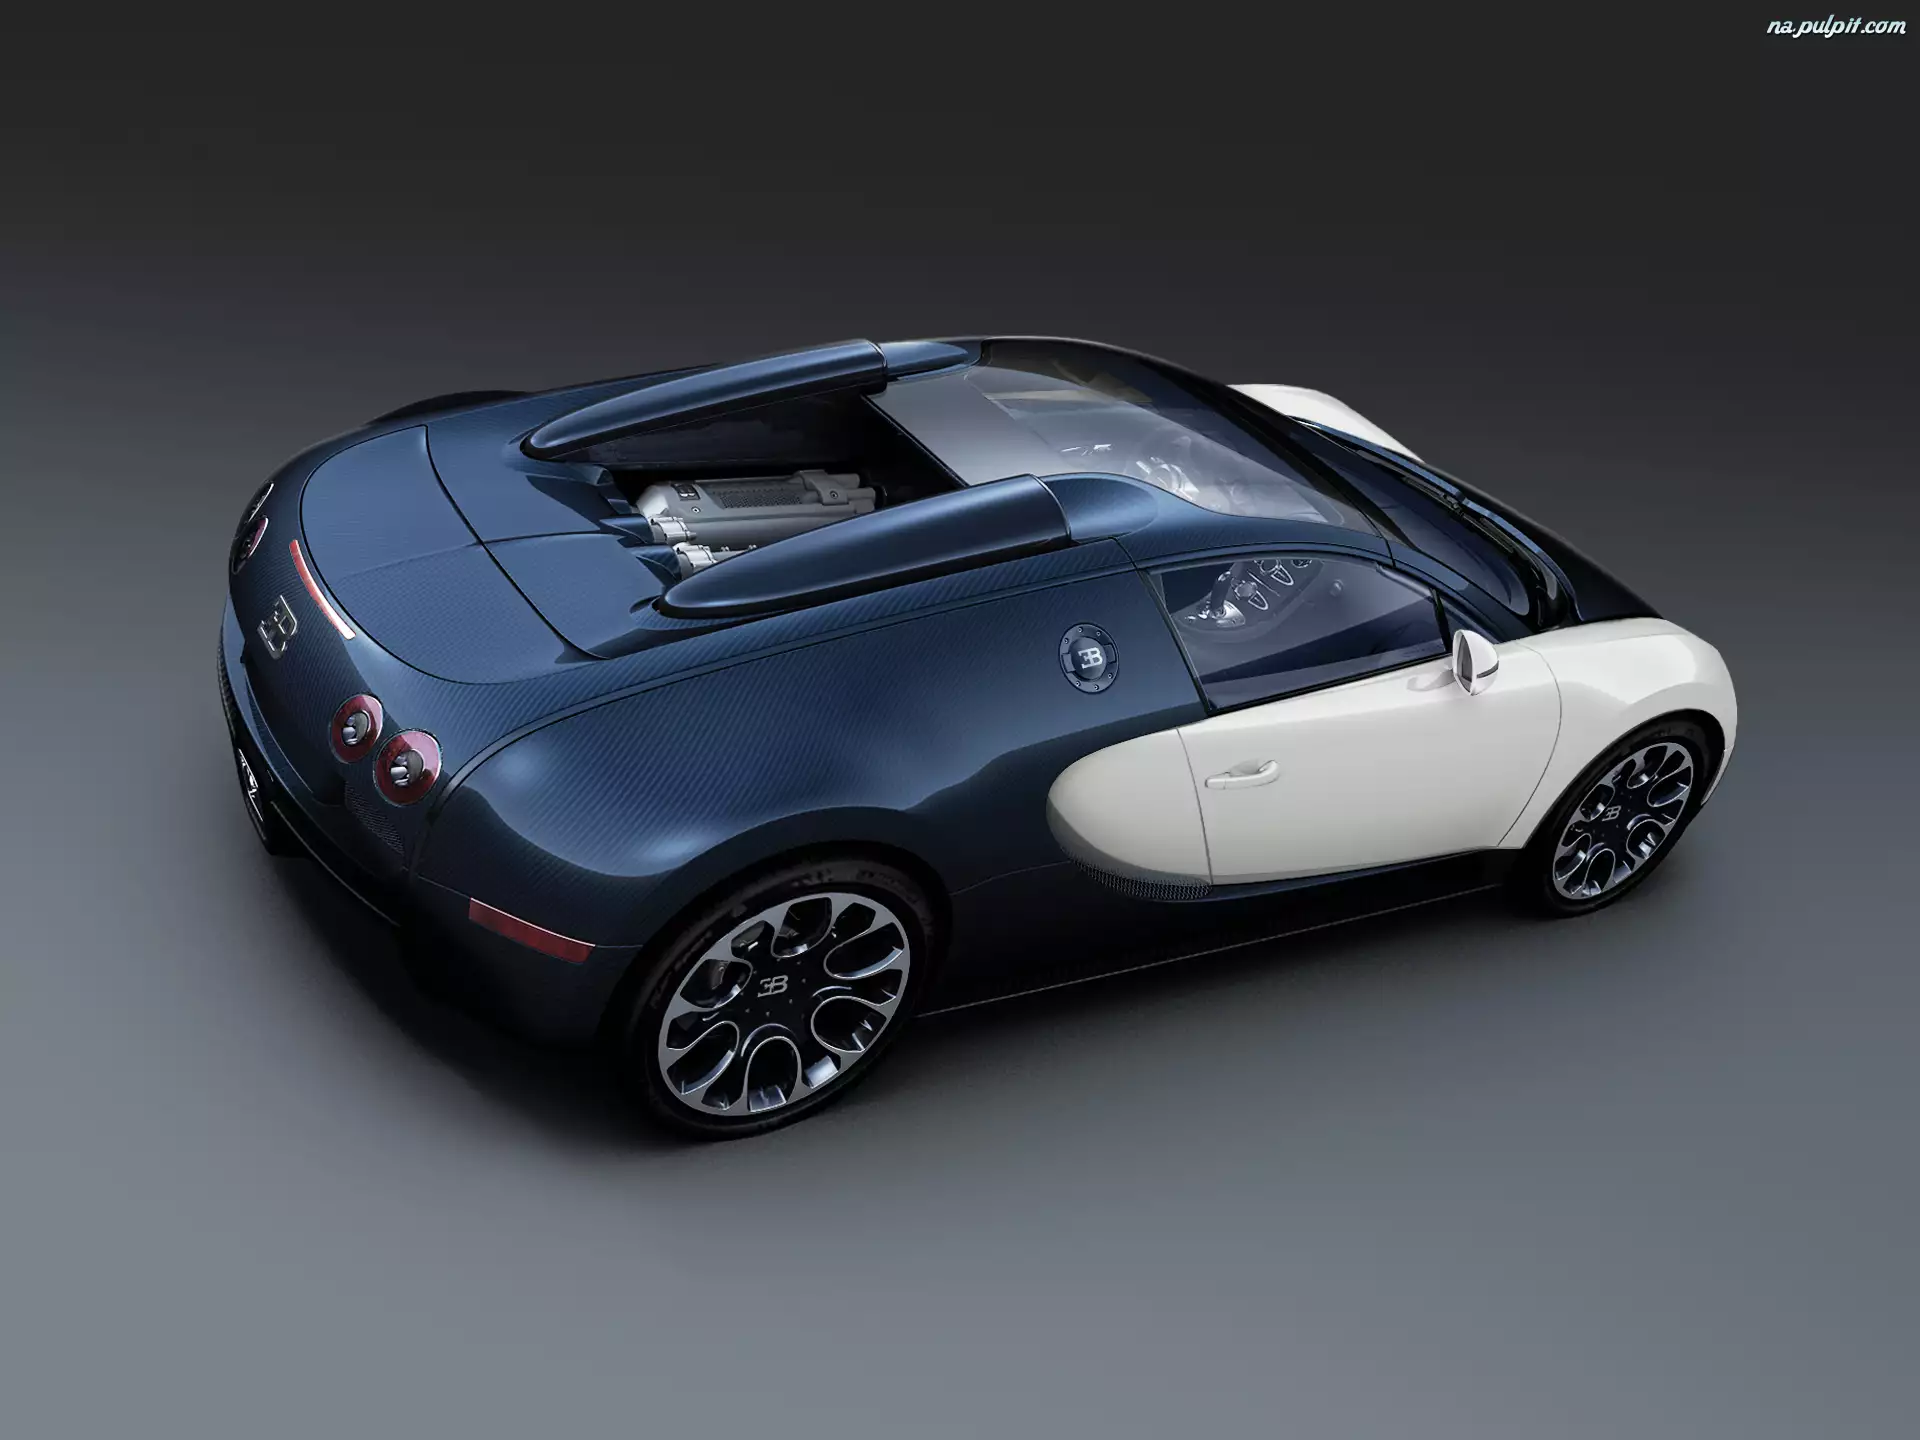 Samochód, Bugatti Veyron, Sportowy